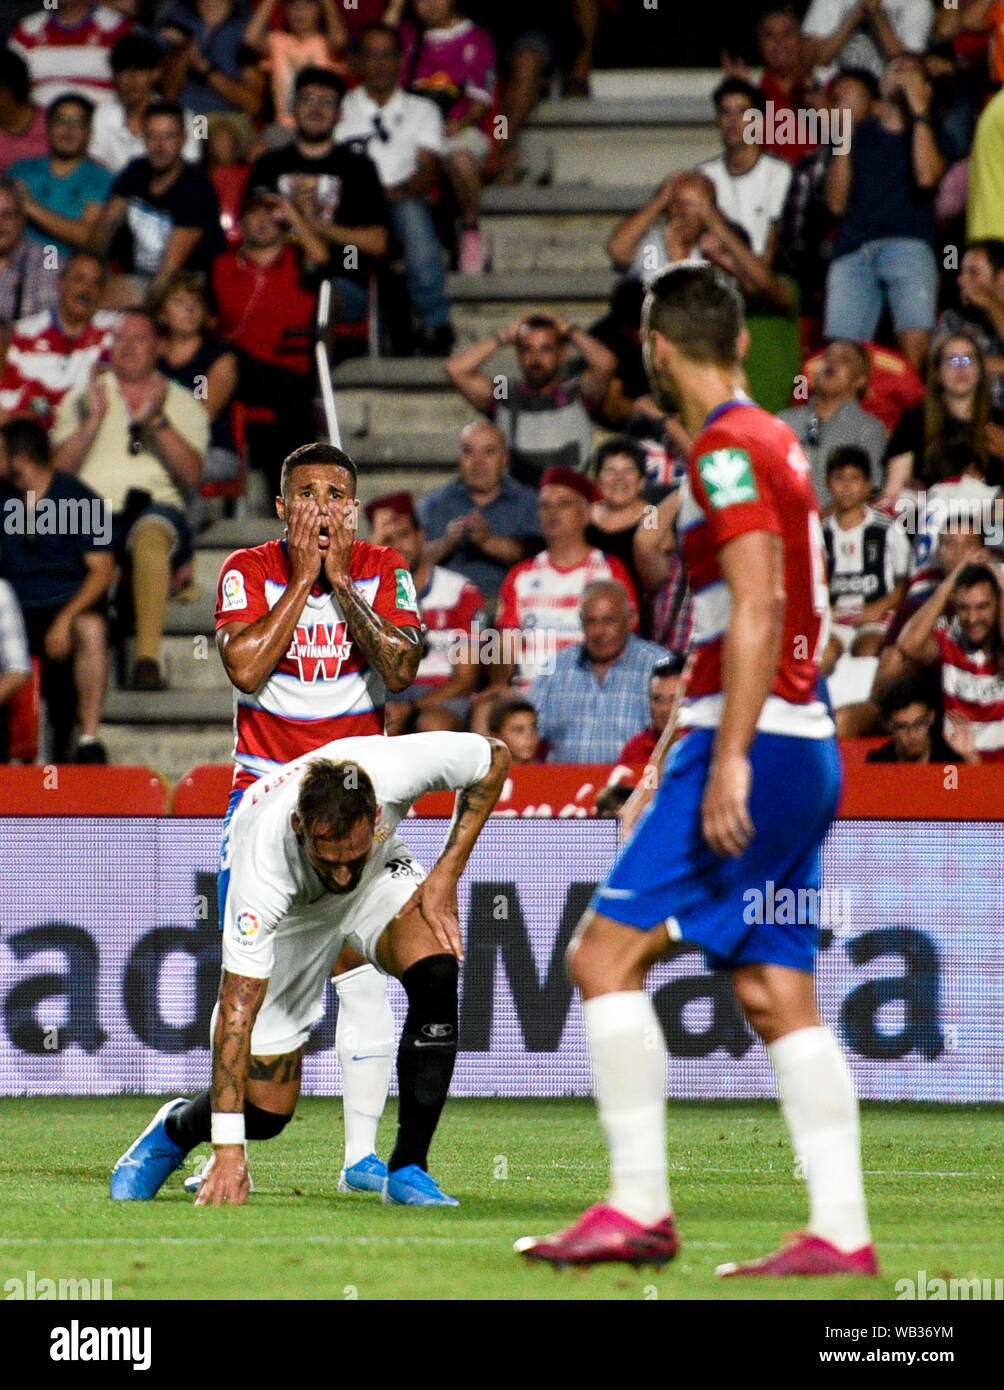 Granada CF player, Darwin Machis reacts during the La Liga Santander match between Granada CF and Sevilla FC. (Final score: Granada CF 0:1 Sevilla FC) Stock Photo